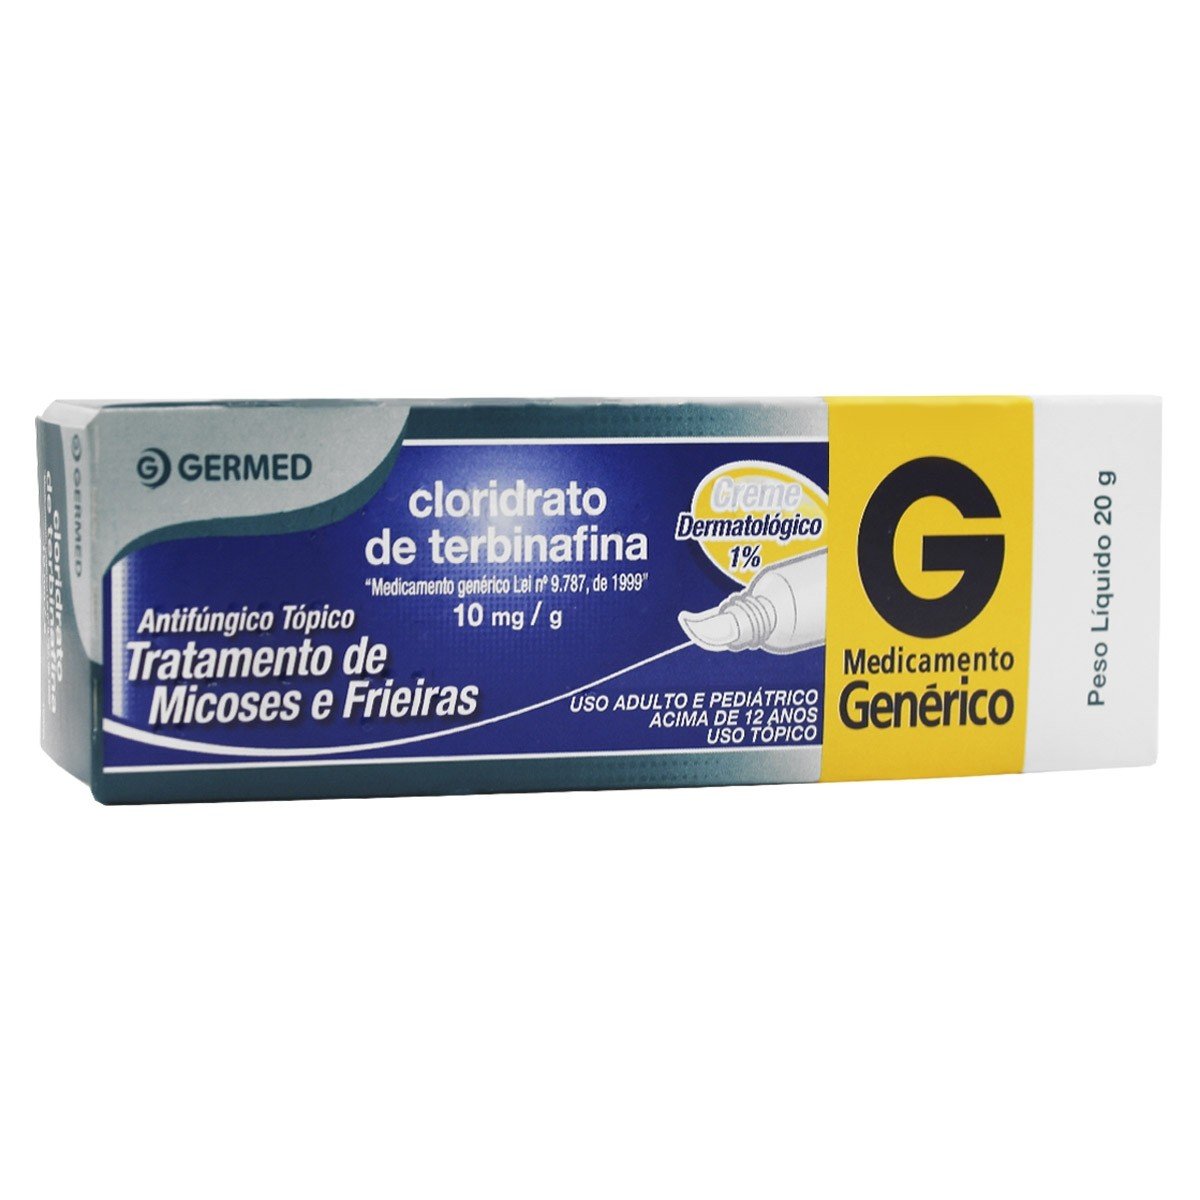 https://www.drogariaminasbrasil.com.br/media/product/c4e/cloridrato-de-terbinafina-10mg-g-pomada-20g-generico-germed-983.jpg